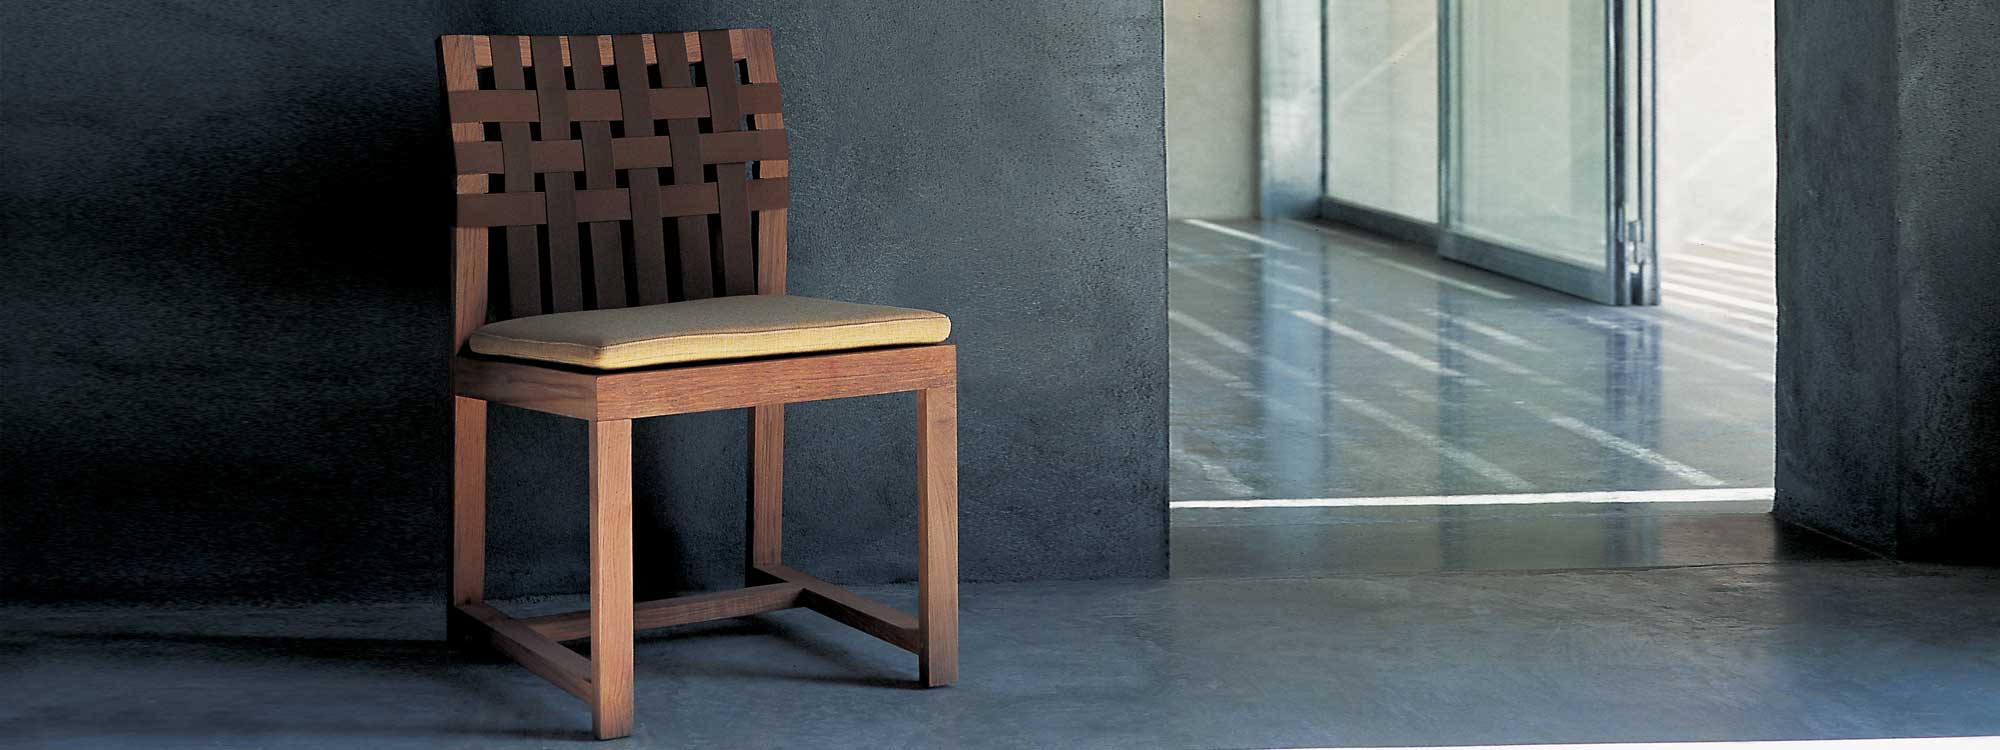 Network teak chair by Rodolfo Dordoni on polished concrete floor.